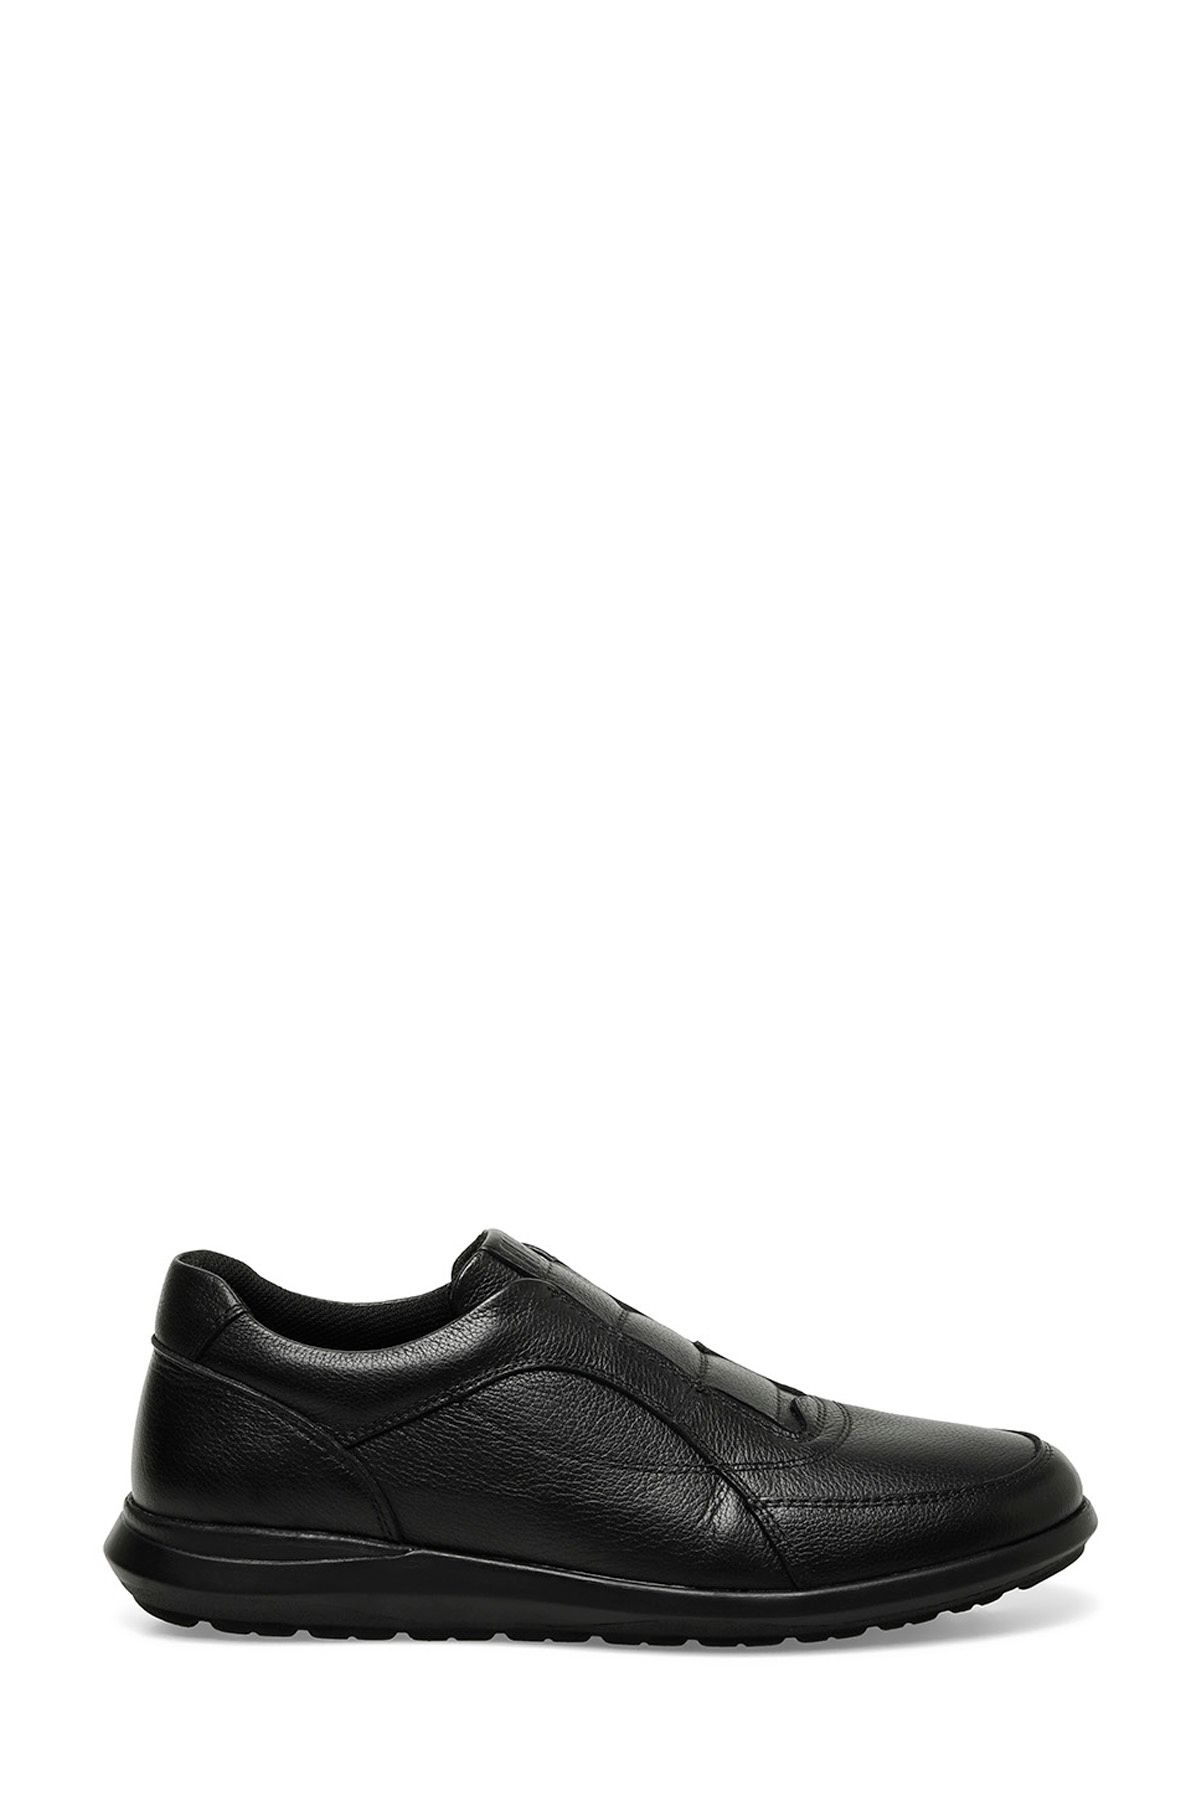 Flogart 50985-1 4FX Siyah Erkek Rahat Ayakkabı